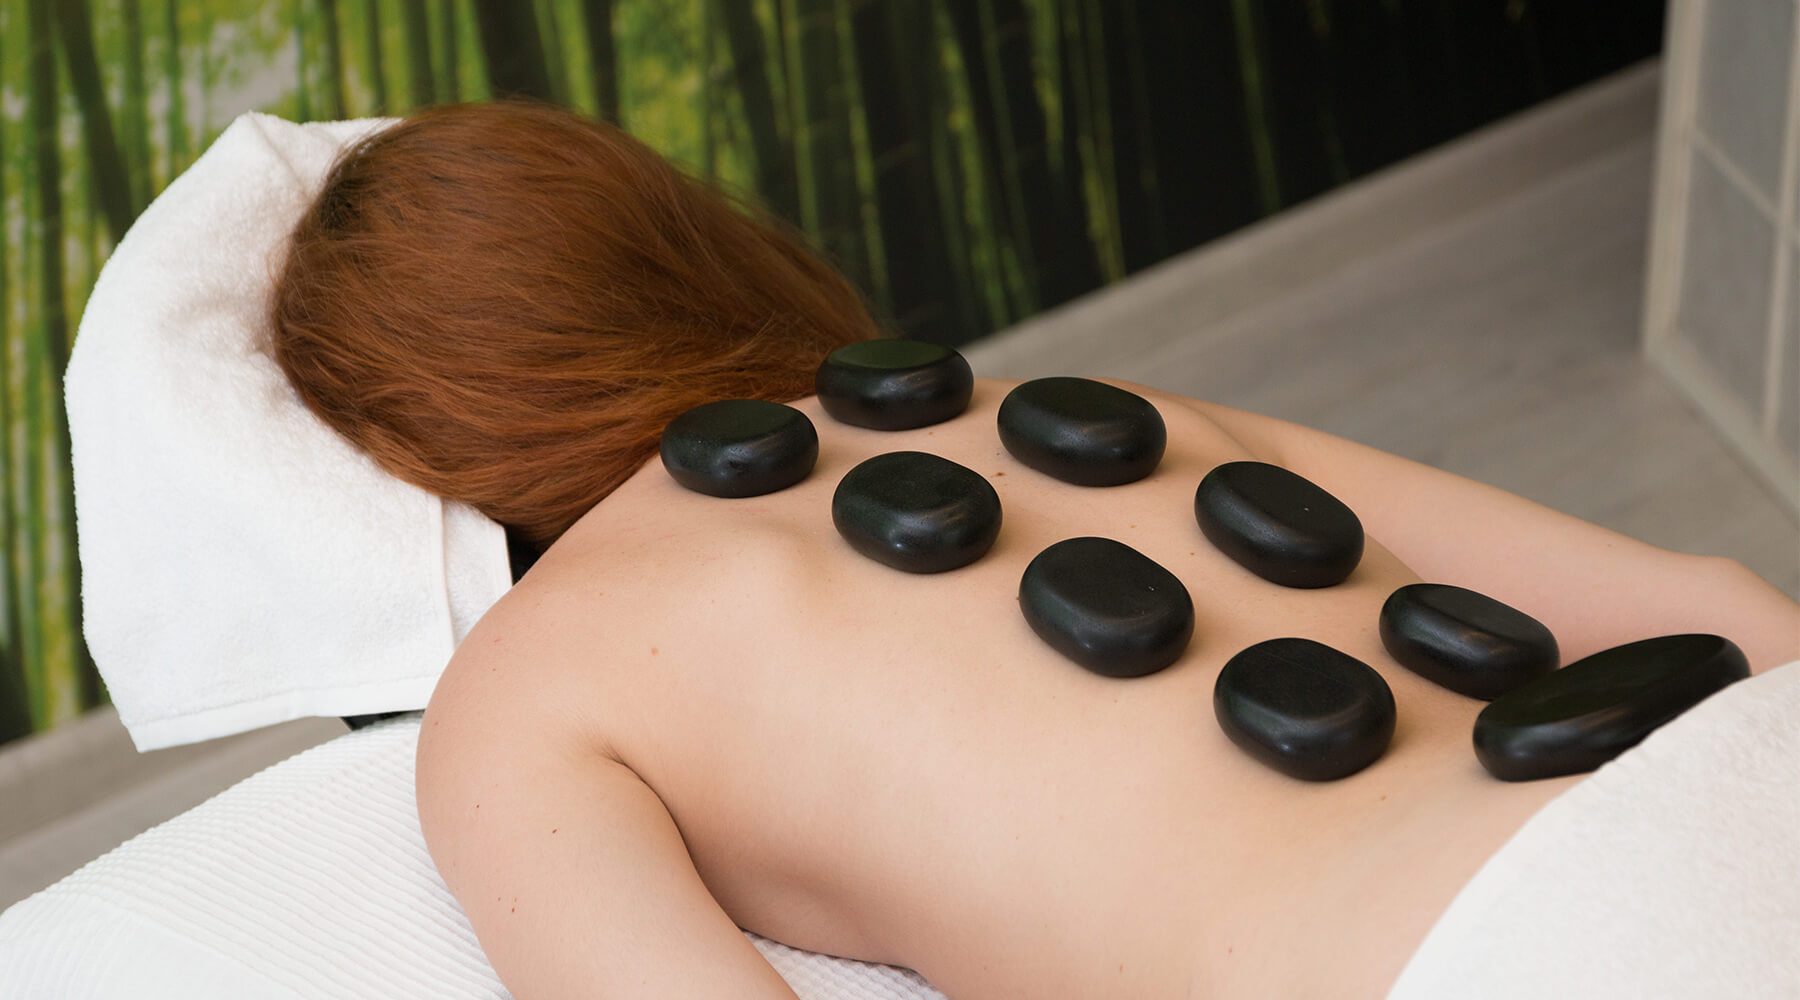 Hot Stones Massage